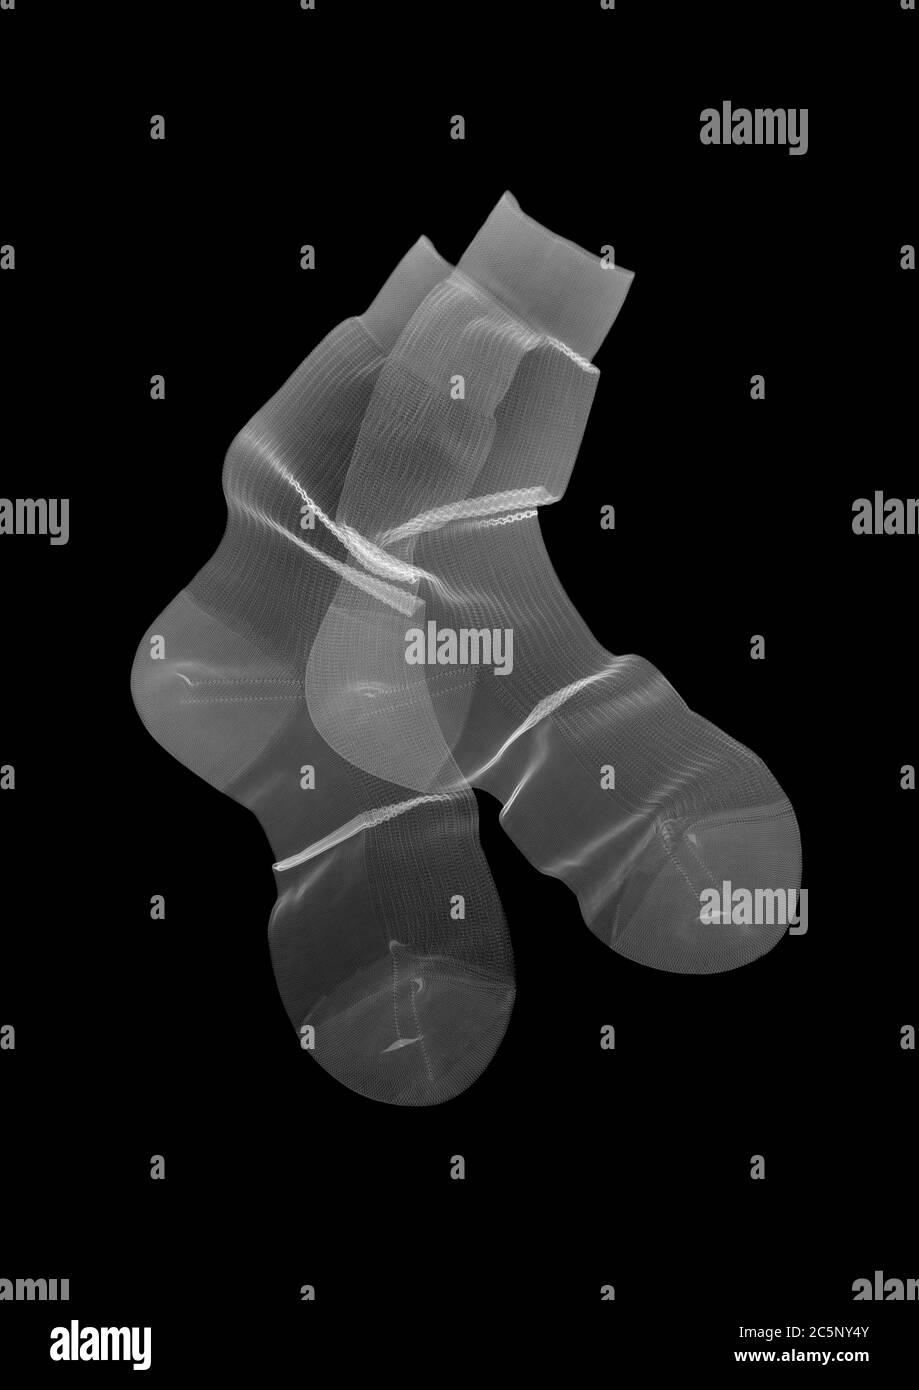 Par de calcetines, rayos X. Foto de stock